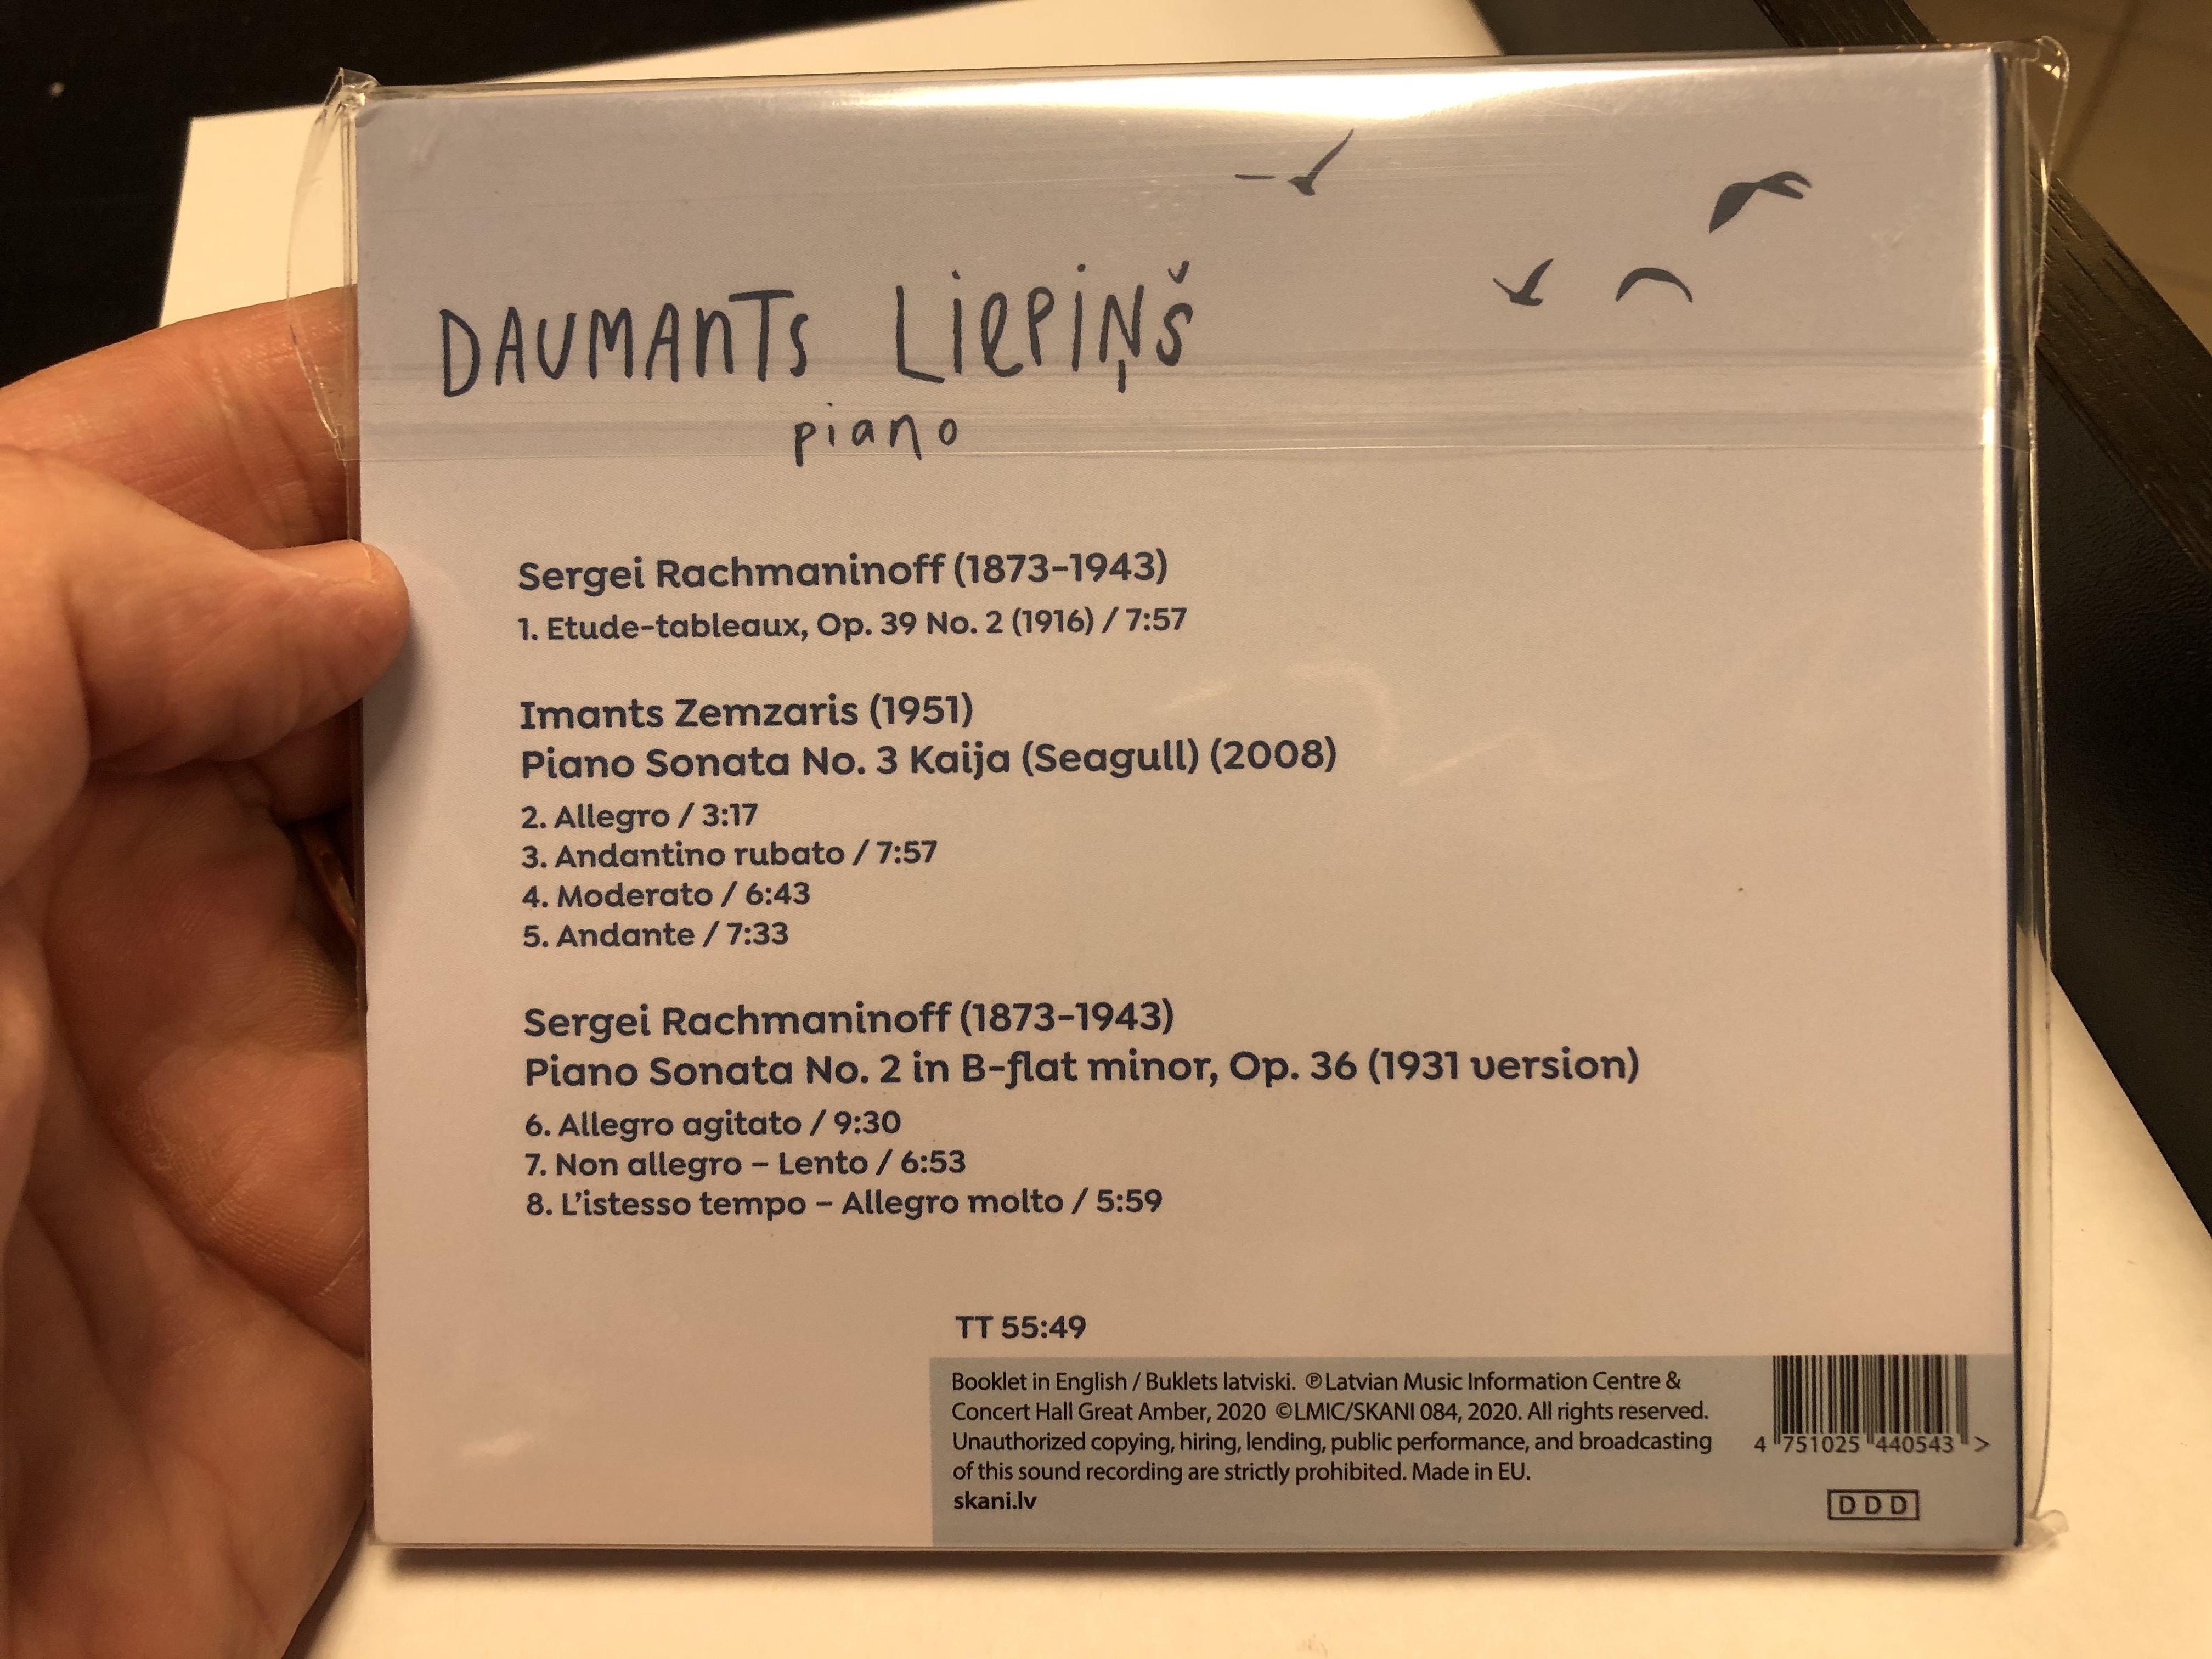 daumants-liepin-piano-rachmaninoff-zemzaris-skani-audio-cd-2020-lmicskani-084-2-.jpg